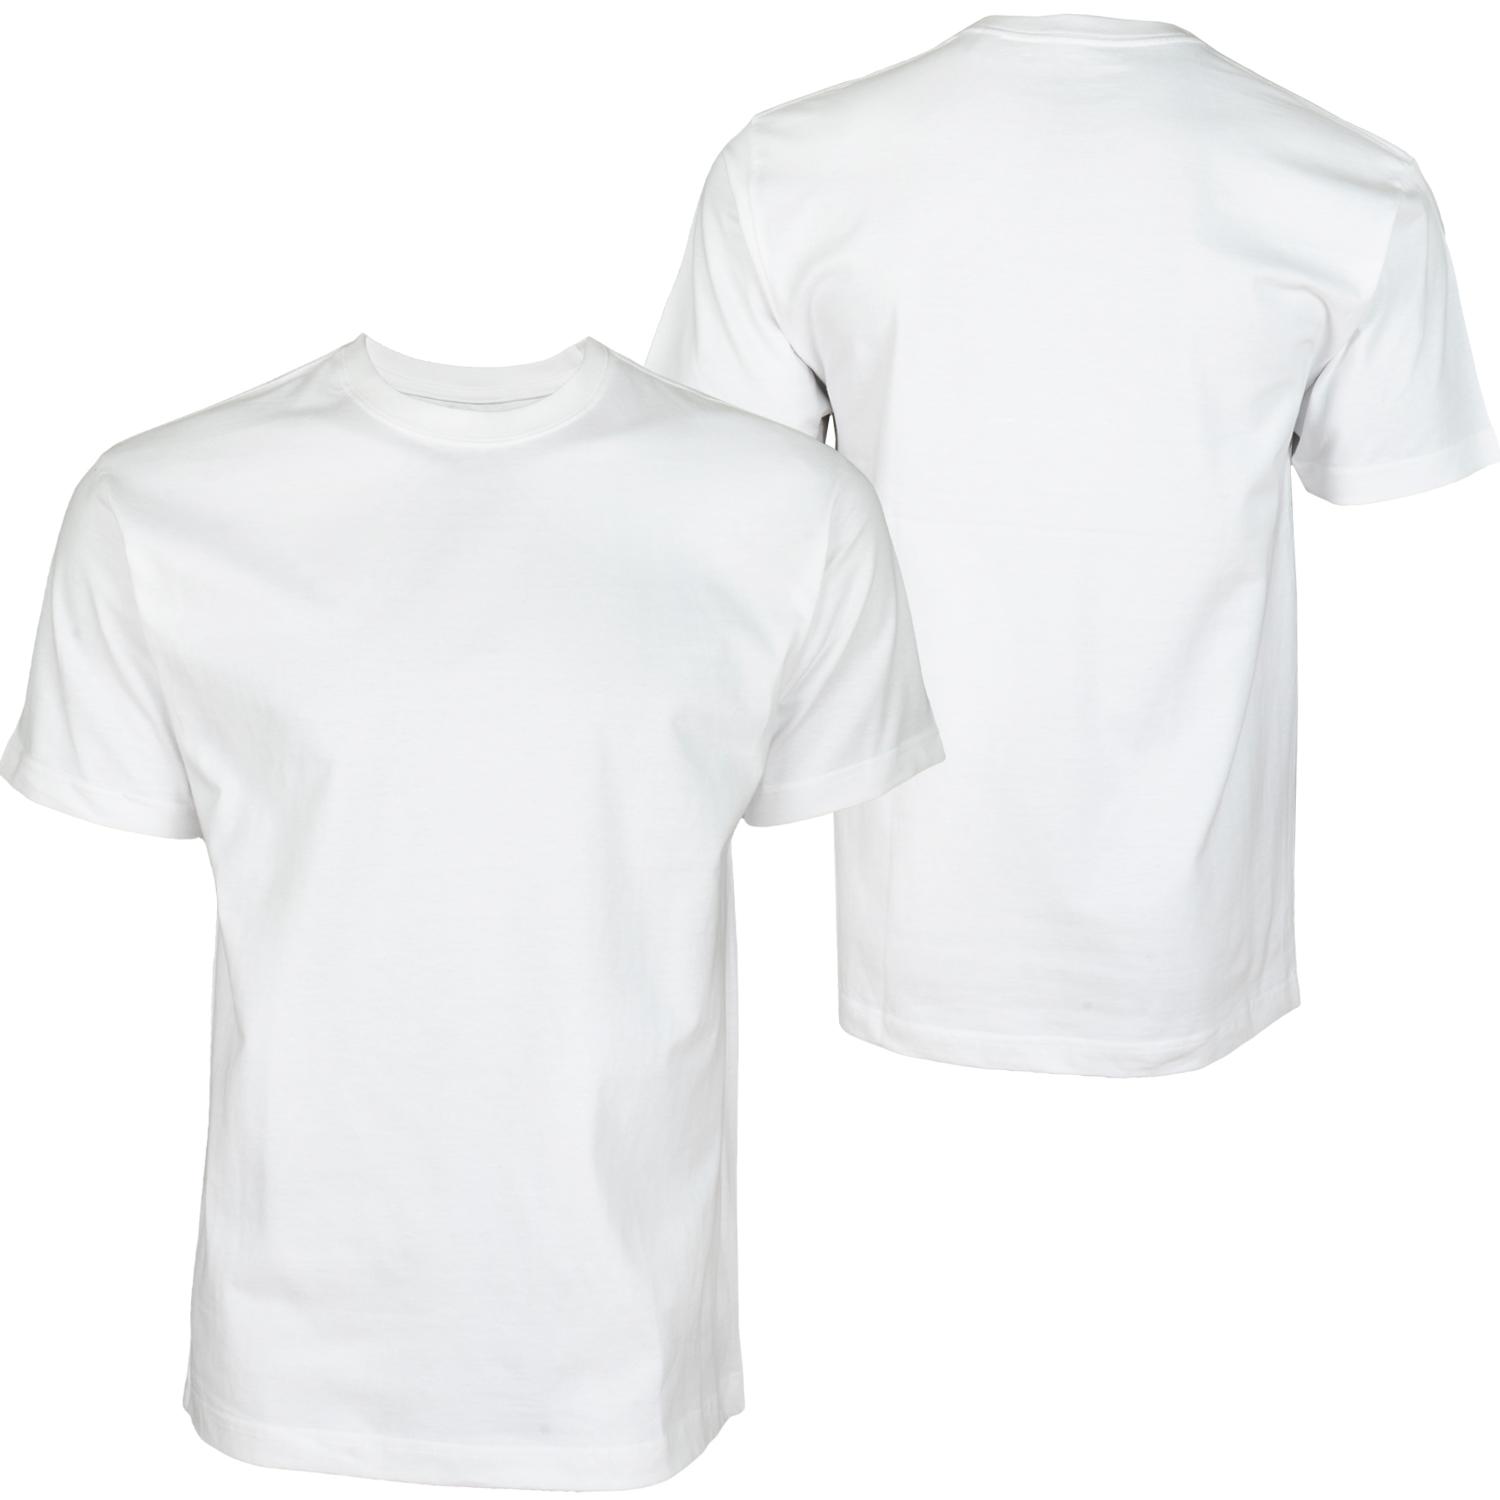 Foto Shmack Basic Blank Camisetas Blanco